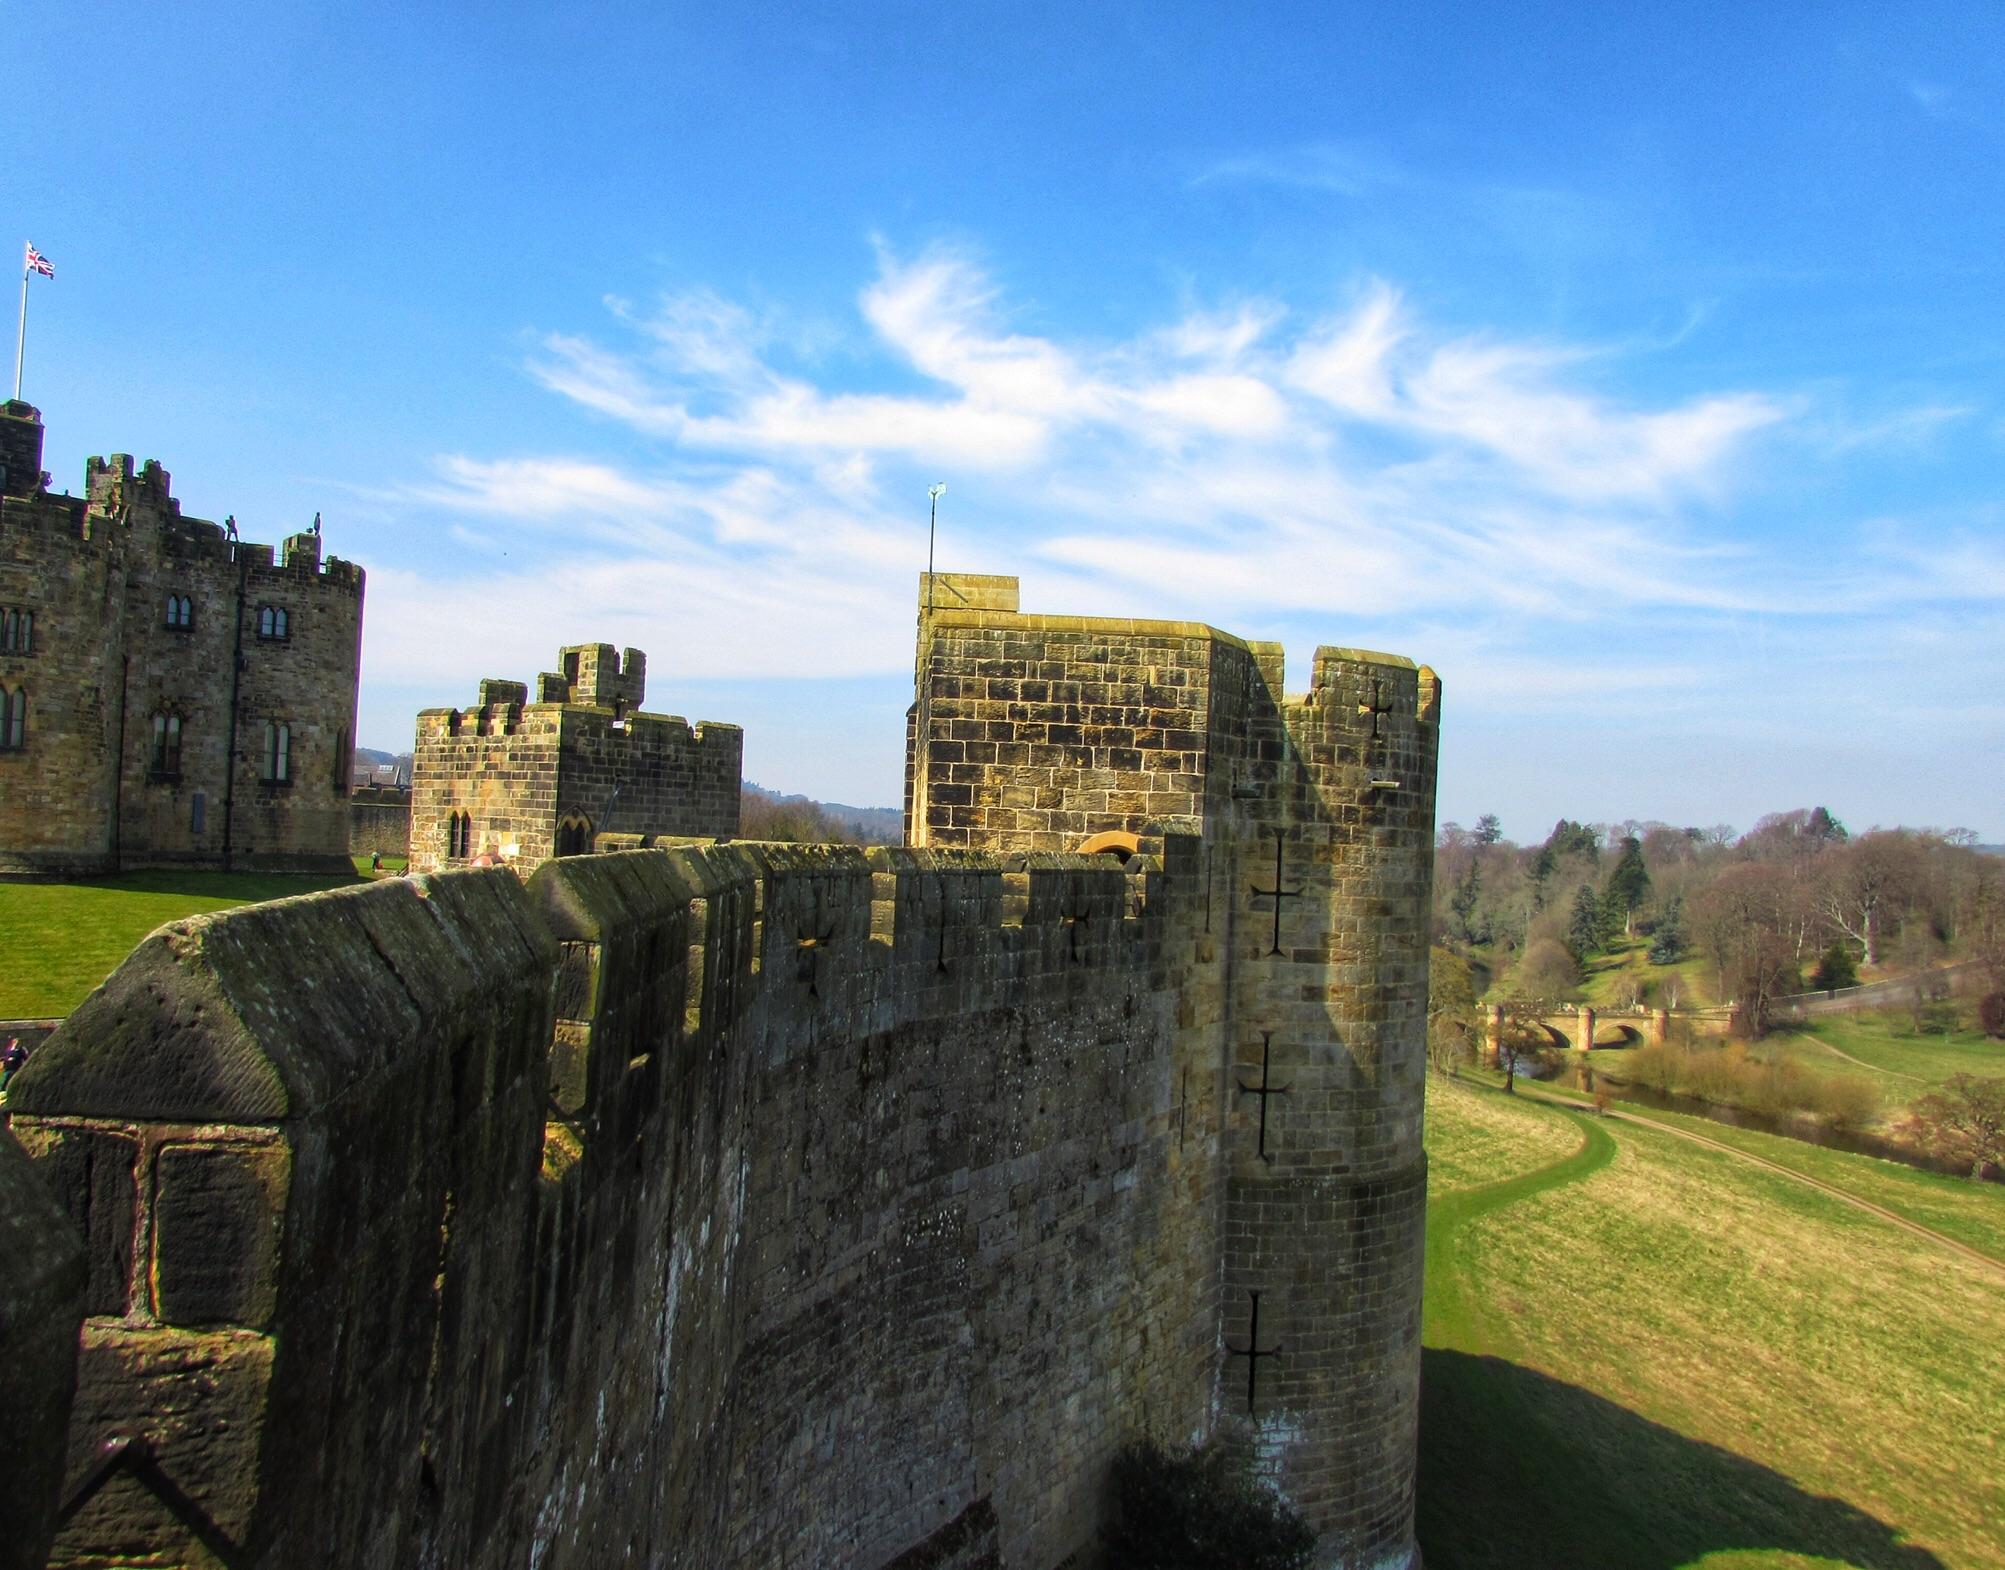 Alnwick castle, England : castles